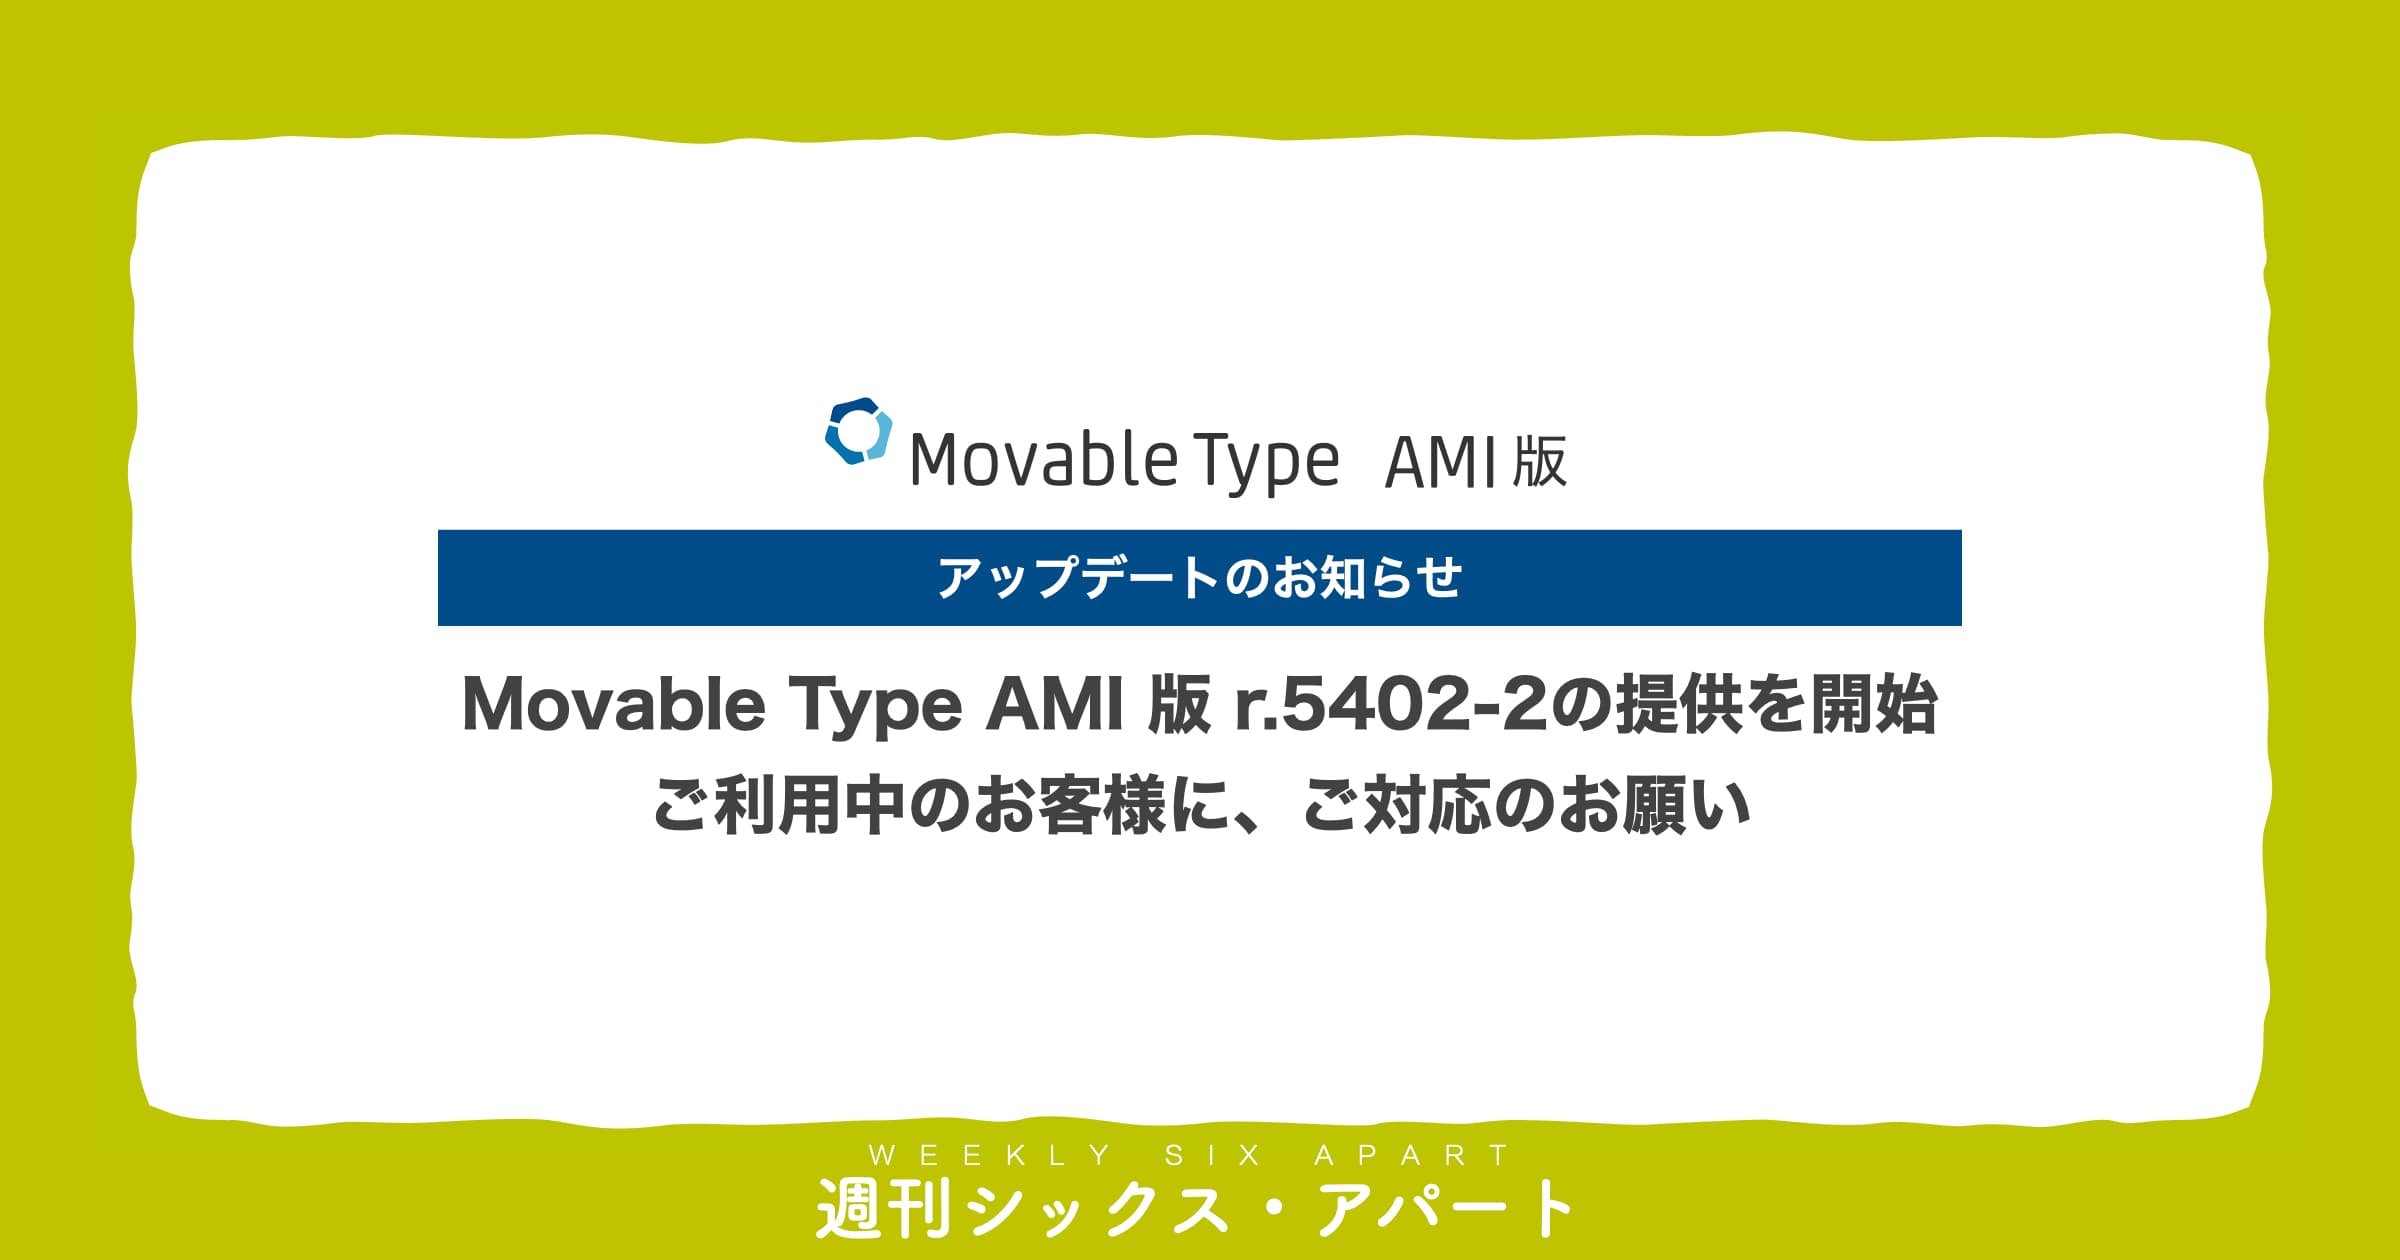  Movable Type AMI 版 r.5402-2 の提供を開始しました #週刊SA